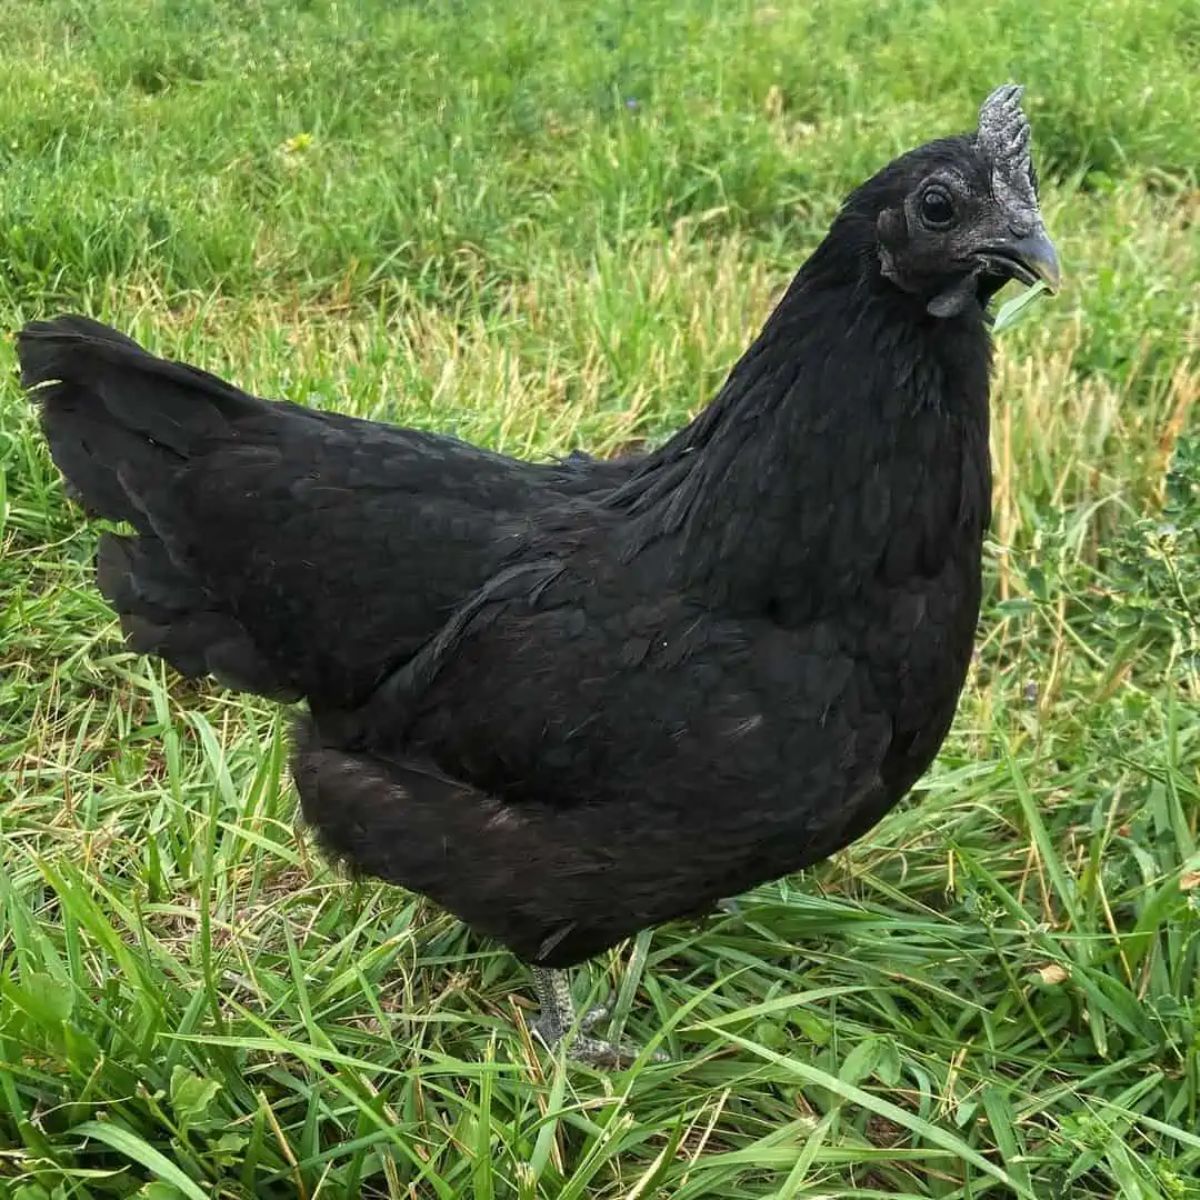 An adrable Swedish Black hen stands on green grass.